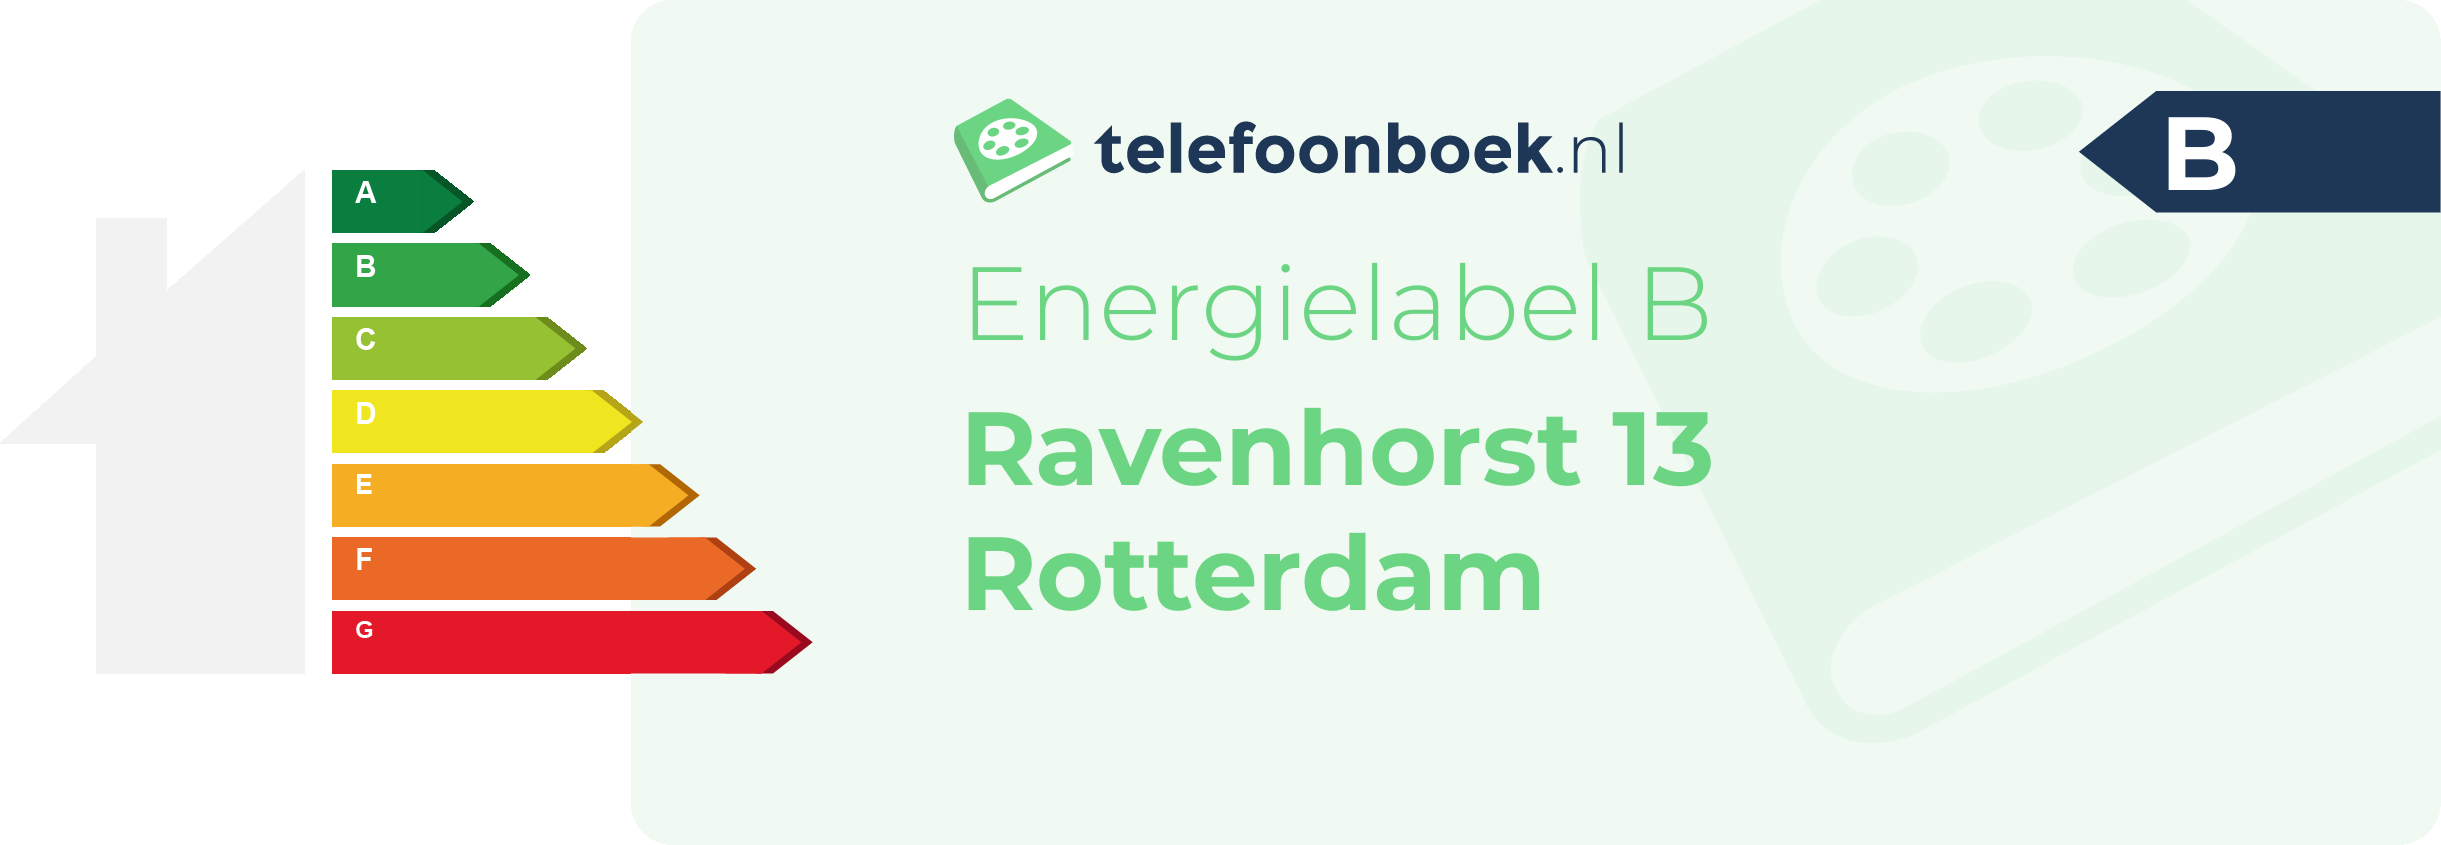 Energielabel Ravenhorst 13 Rotterdam